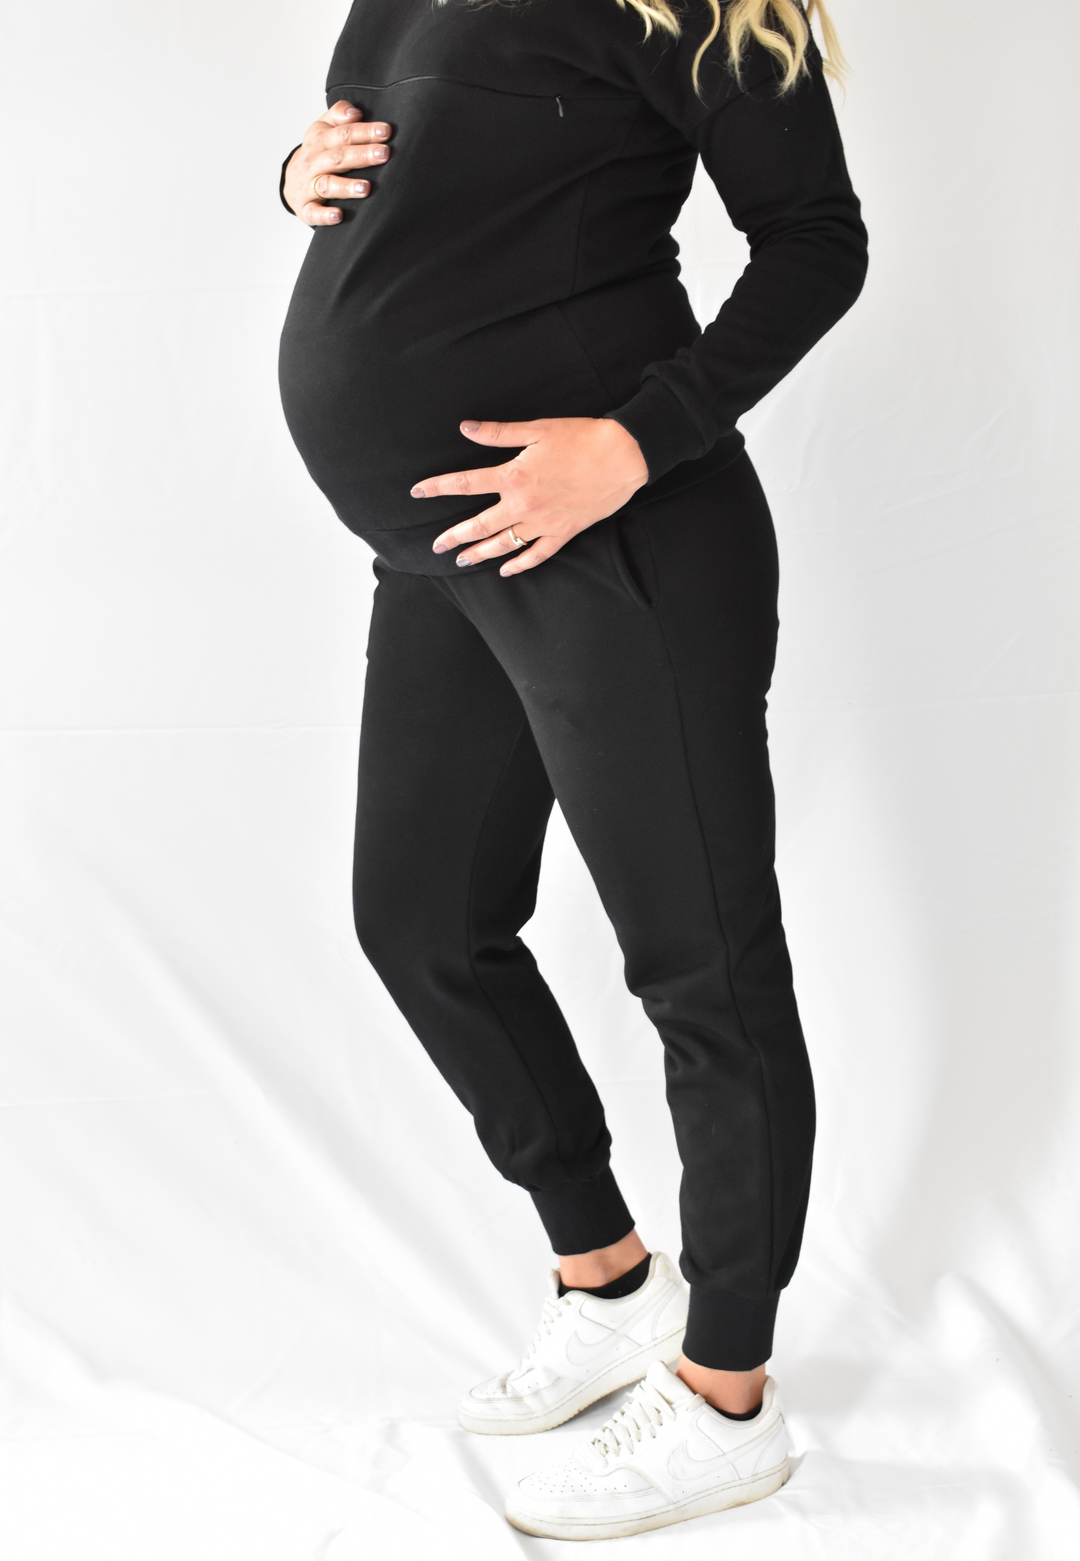 Maternity jeans Canada. Maternity denim Canada. Maternity pants. Pregnancy jeans. Pregnancy denim. Pregnancy leggings. Maternity leggings.